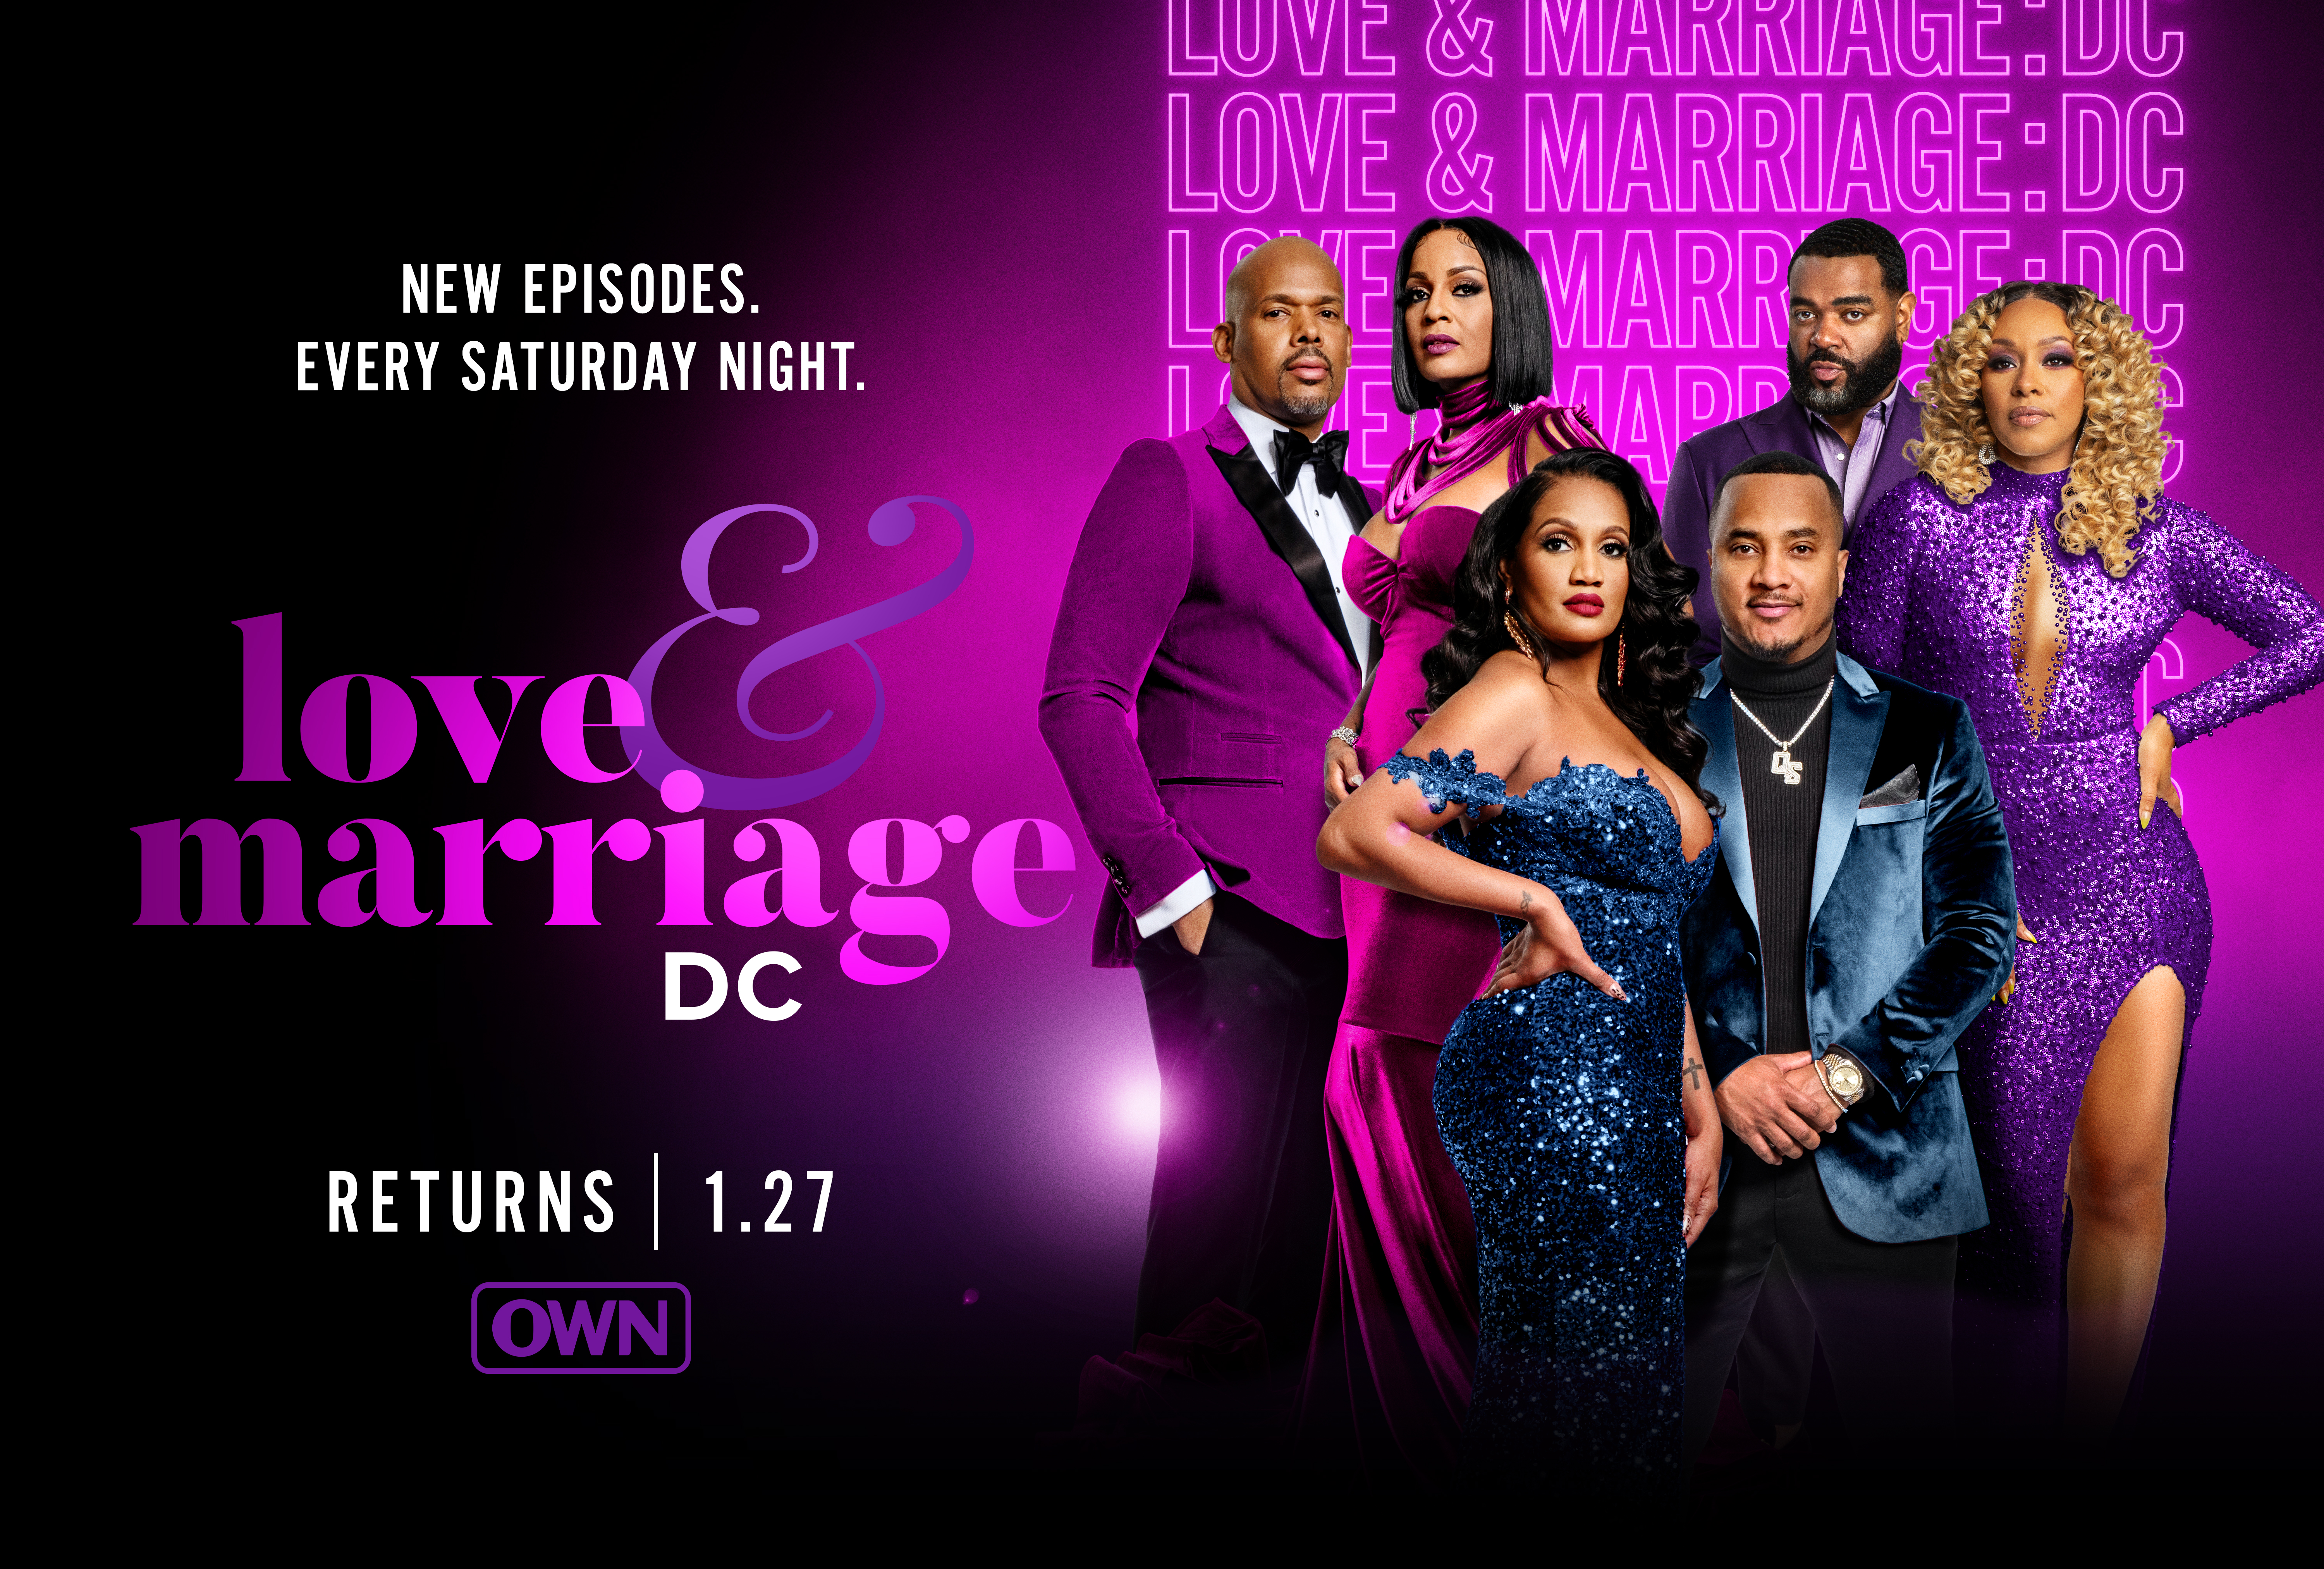 Love & Marriage: D.C., #LAMDC